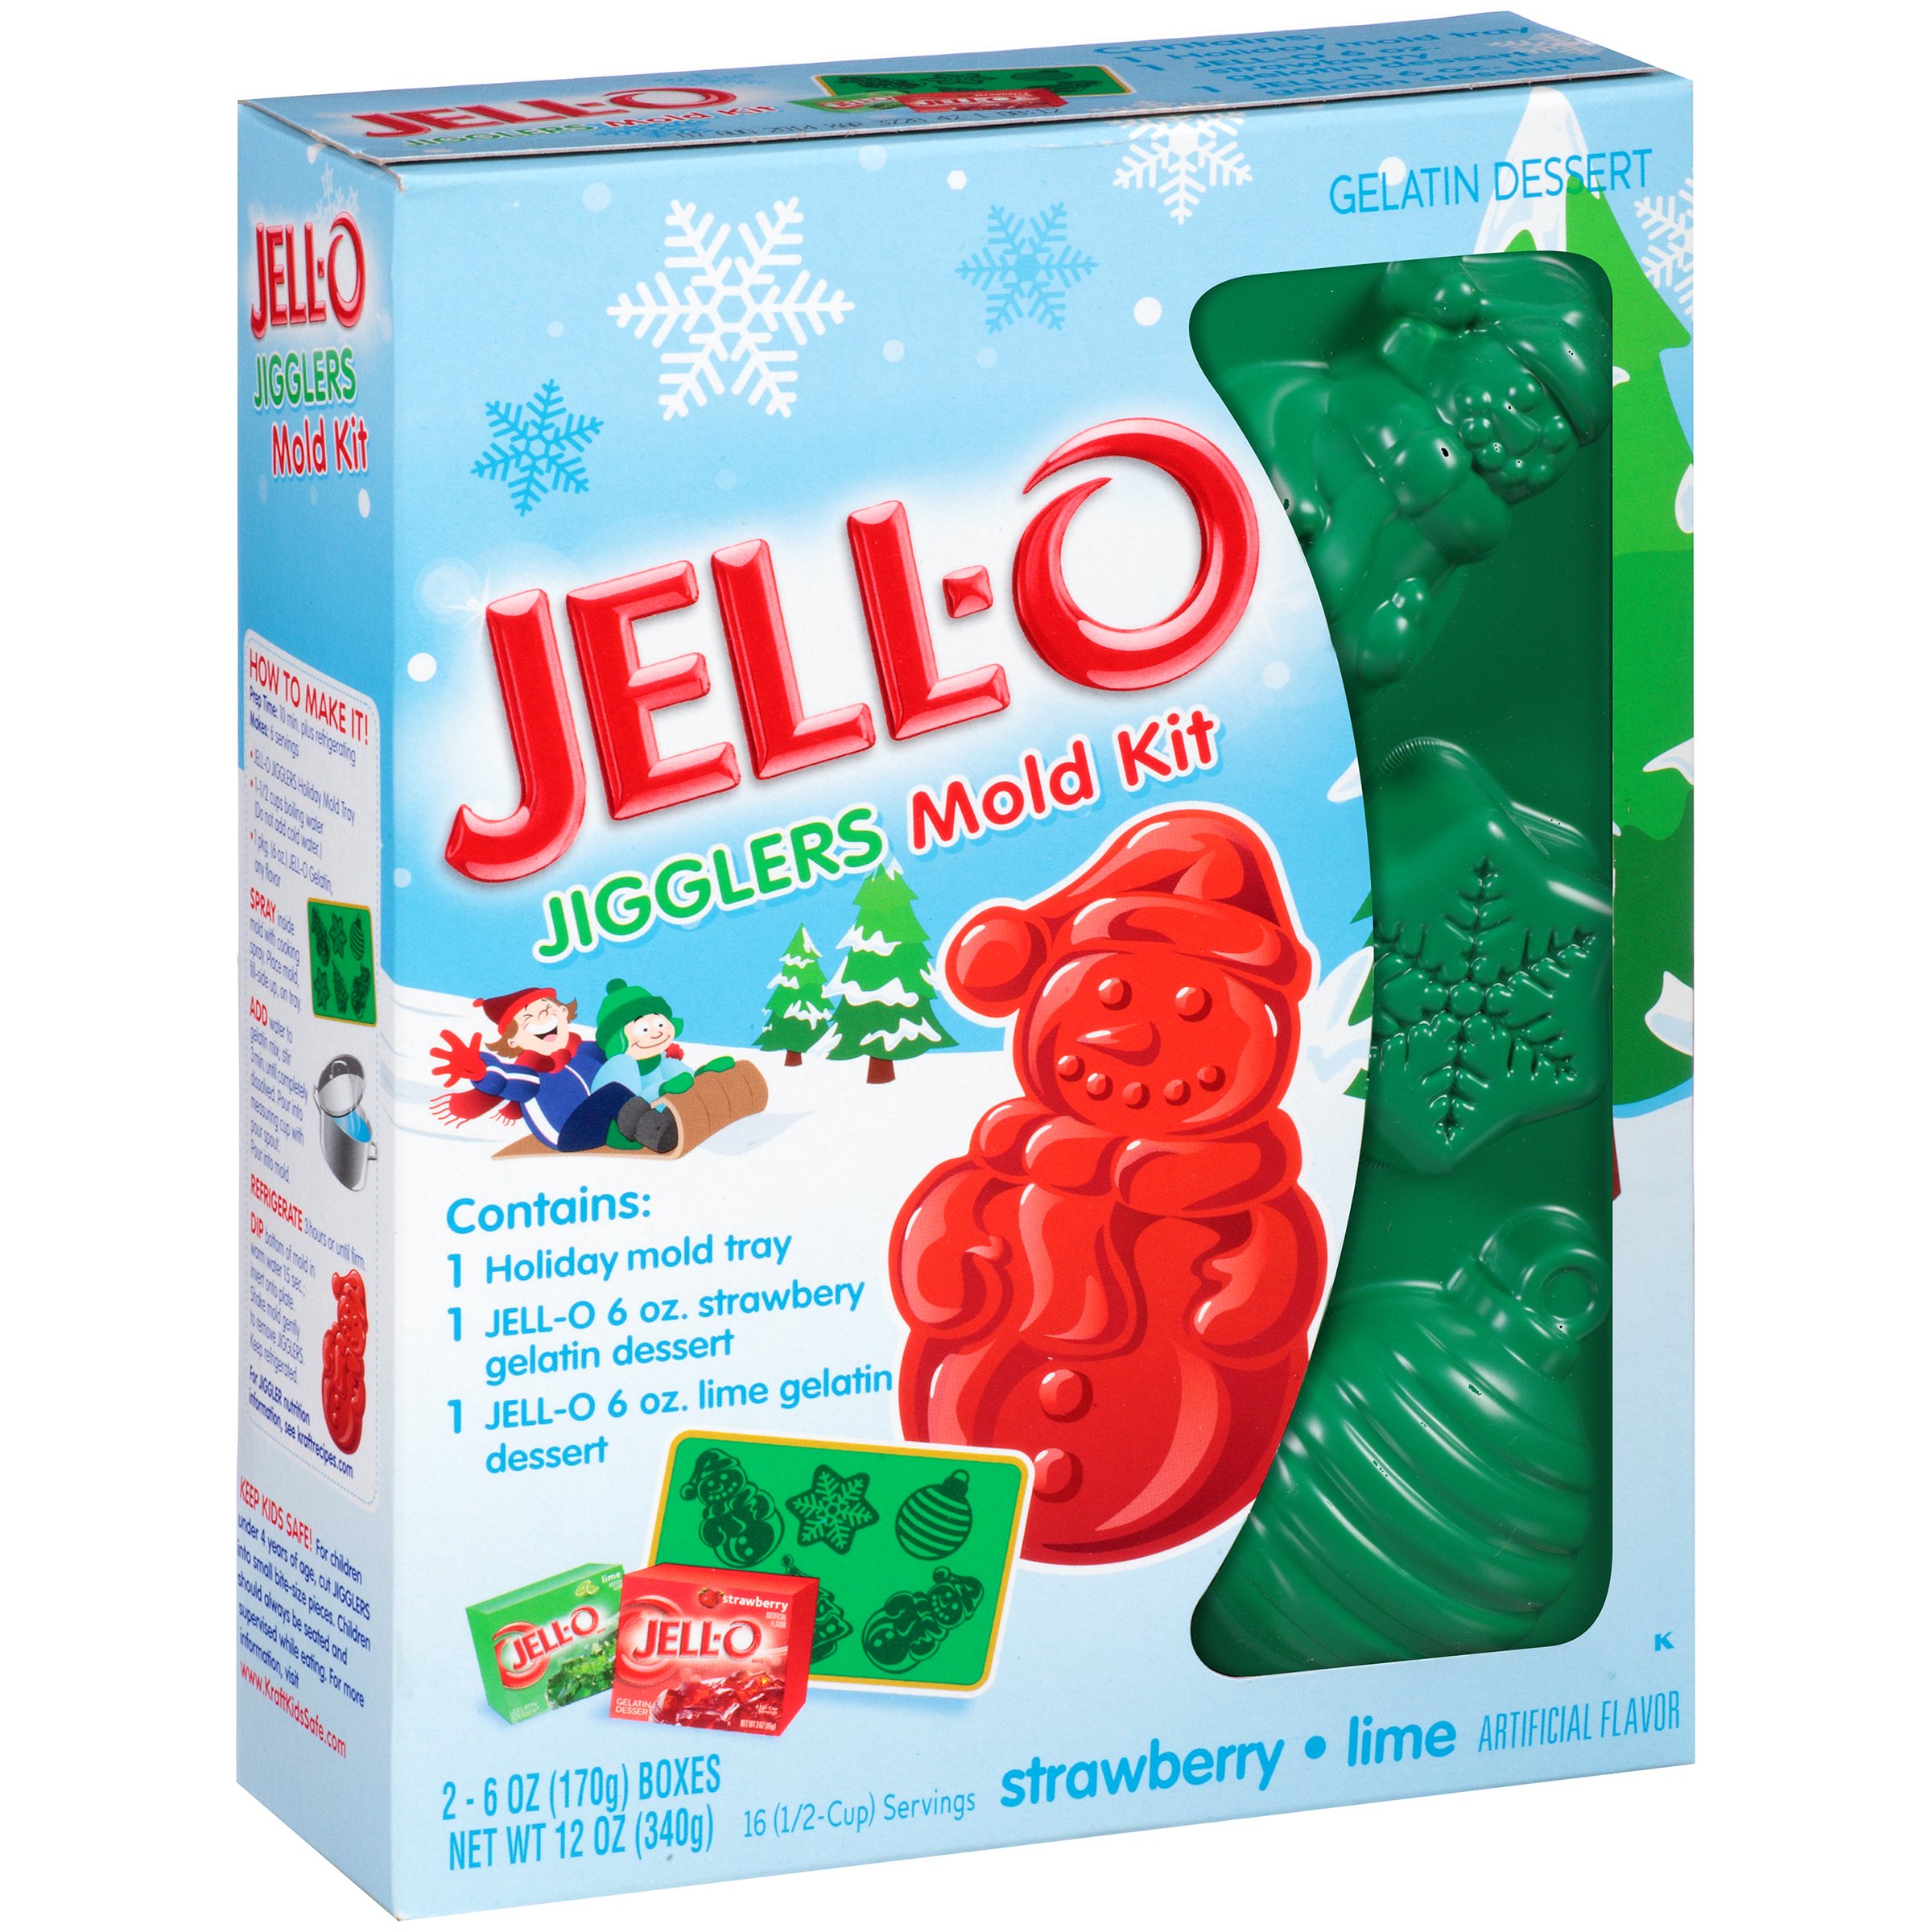 Jell-O Jigglers Holiday Mold Kit - Shop Pudding & Gelatin Mix at H-E-B